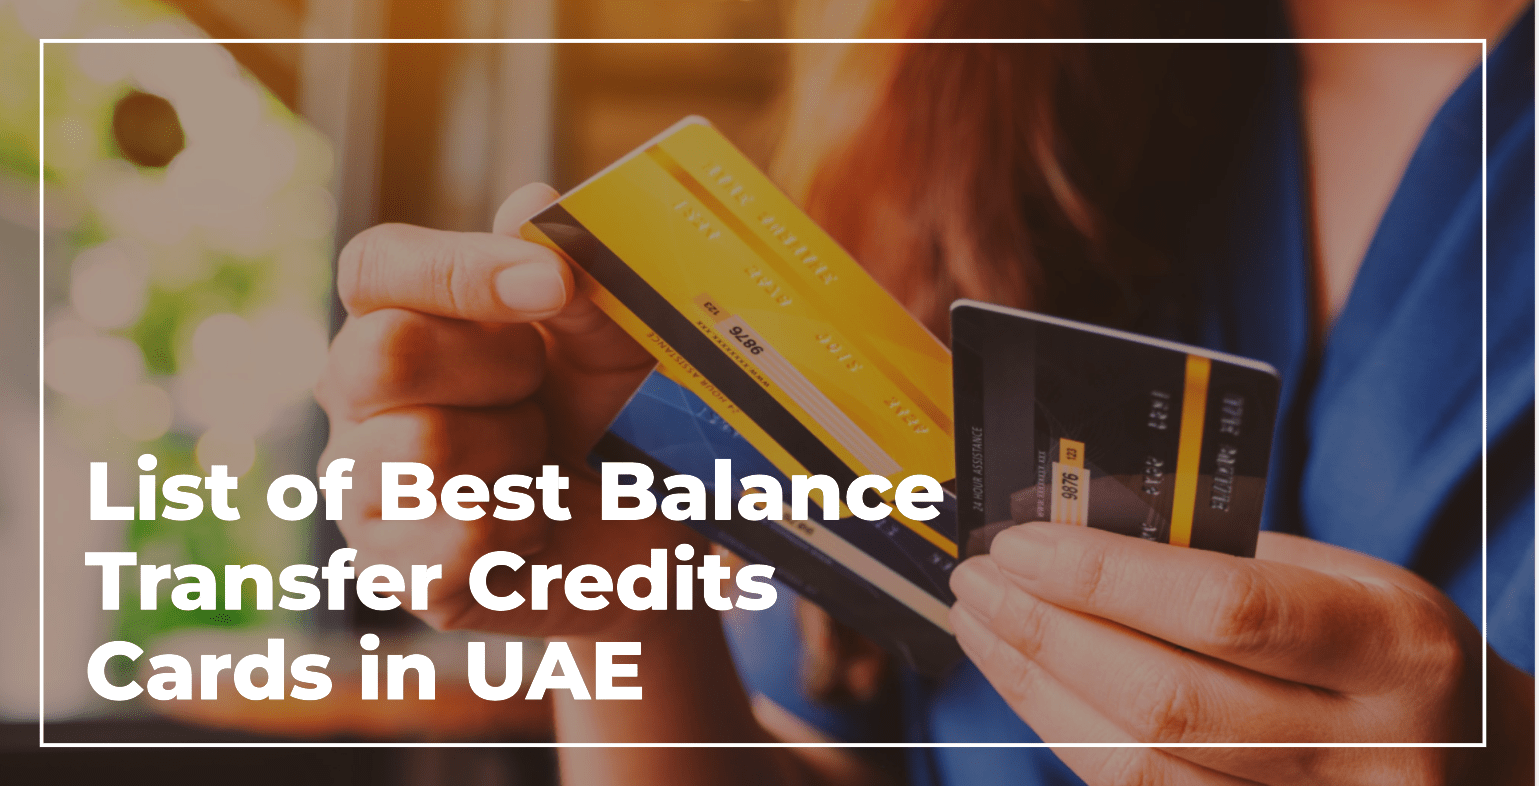 Balance Transfer Credits Cards in UAE